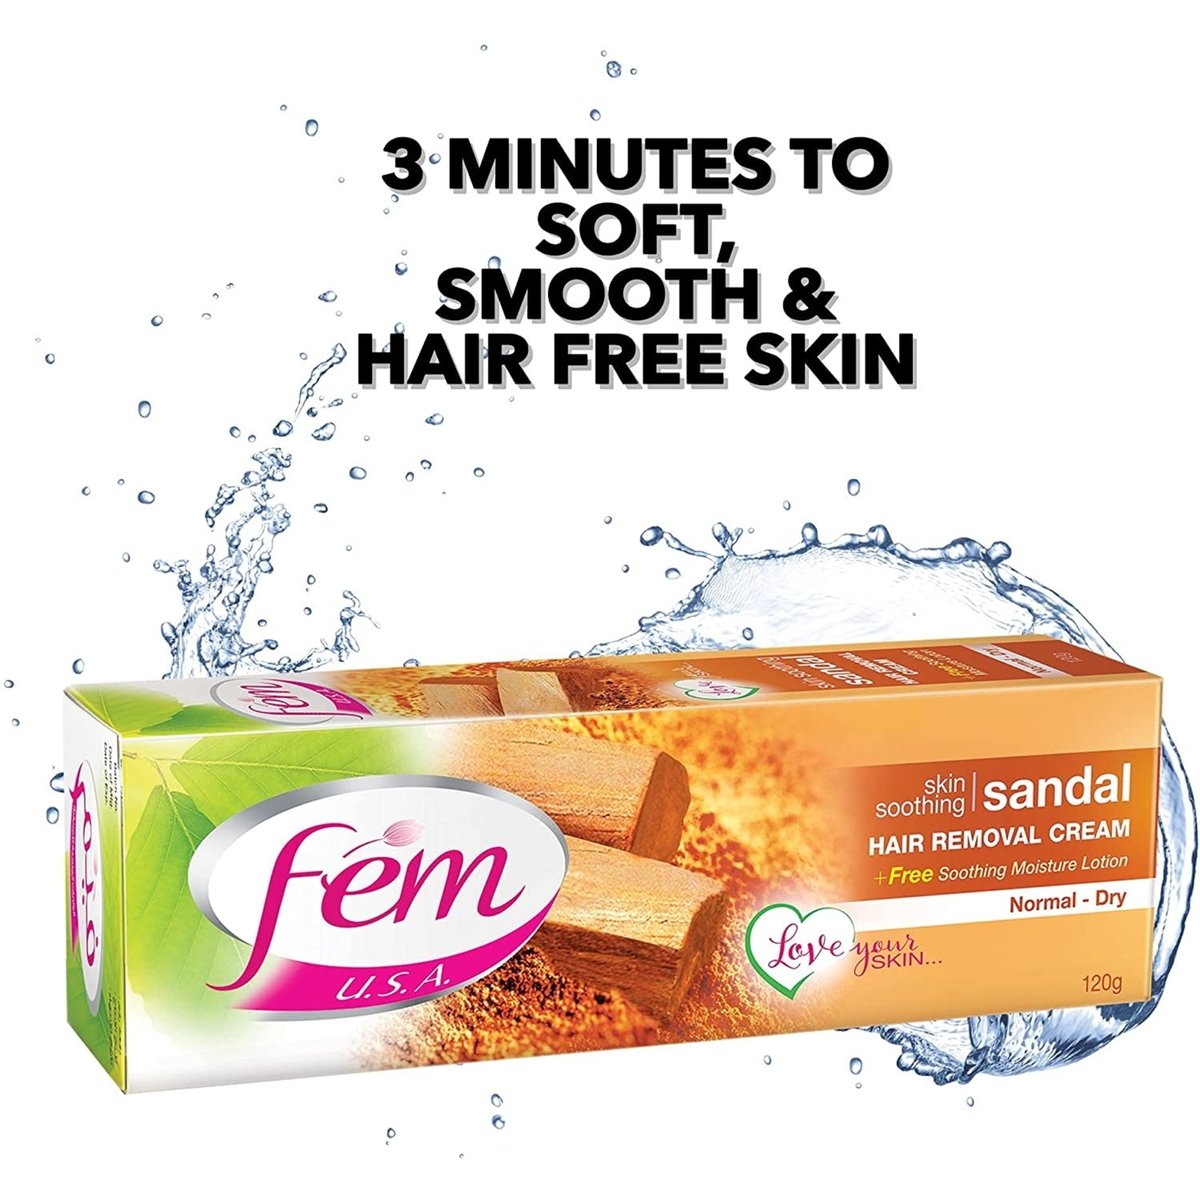 Fem USA Hair Removal Cream with Sandal For Softening Skin 120 g